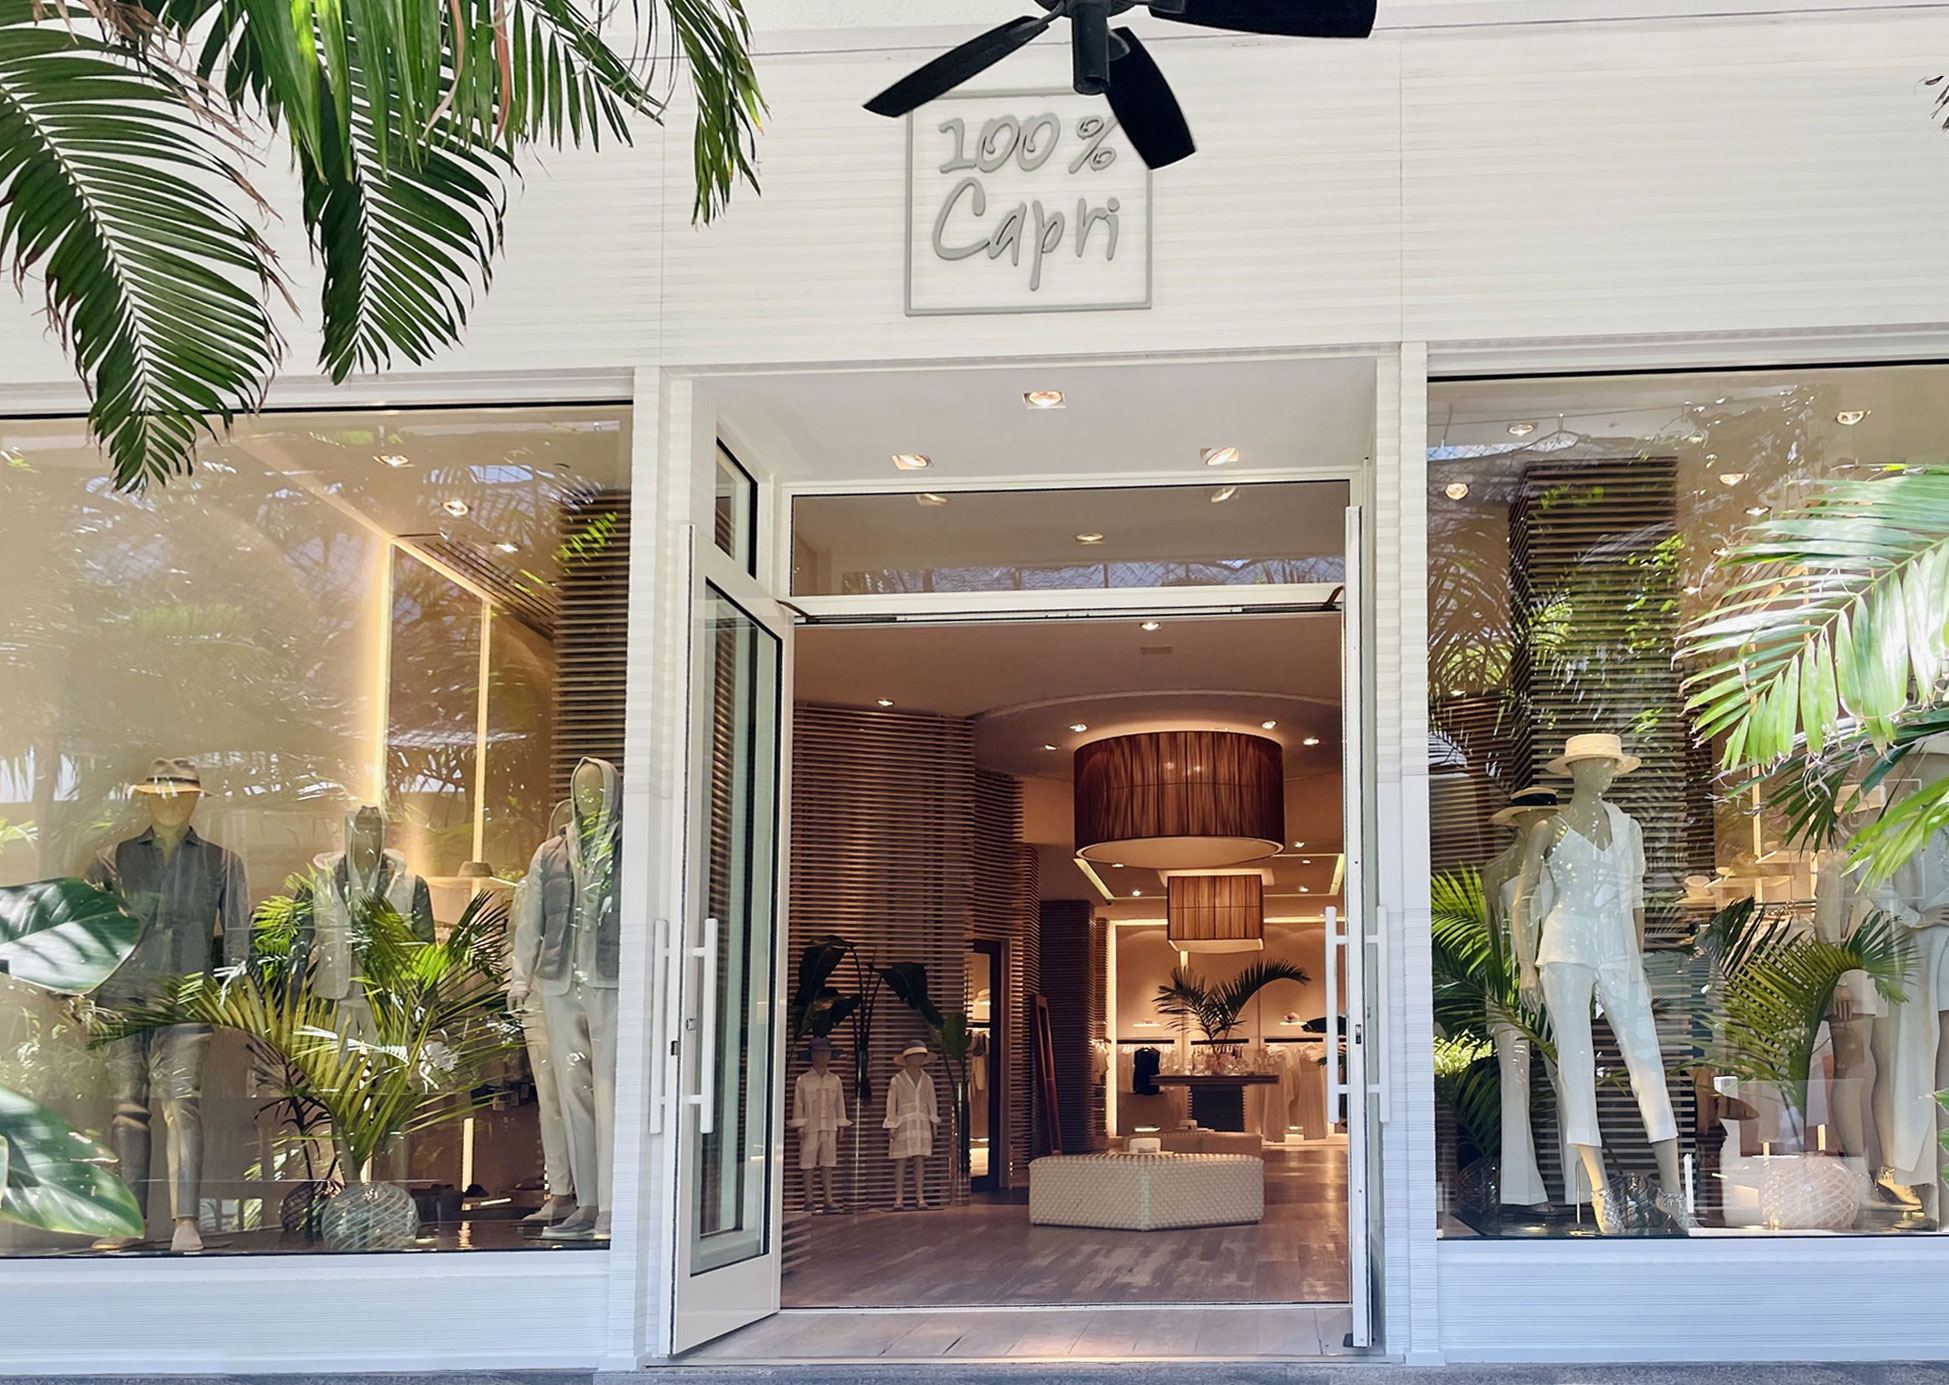 Capri at Bal Shops Miami.